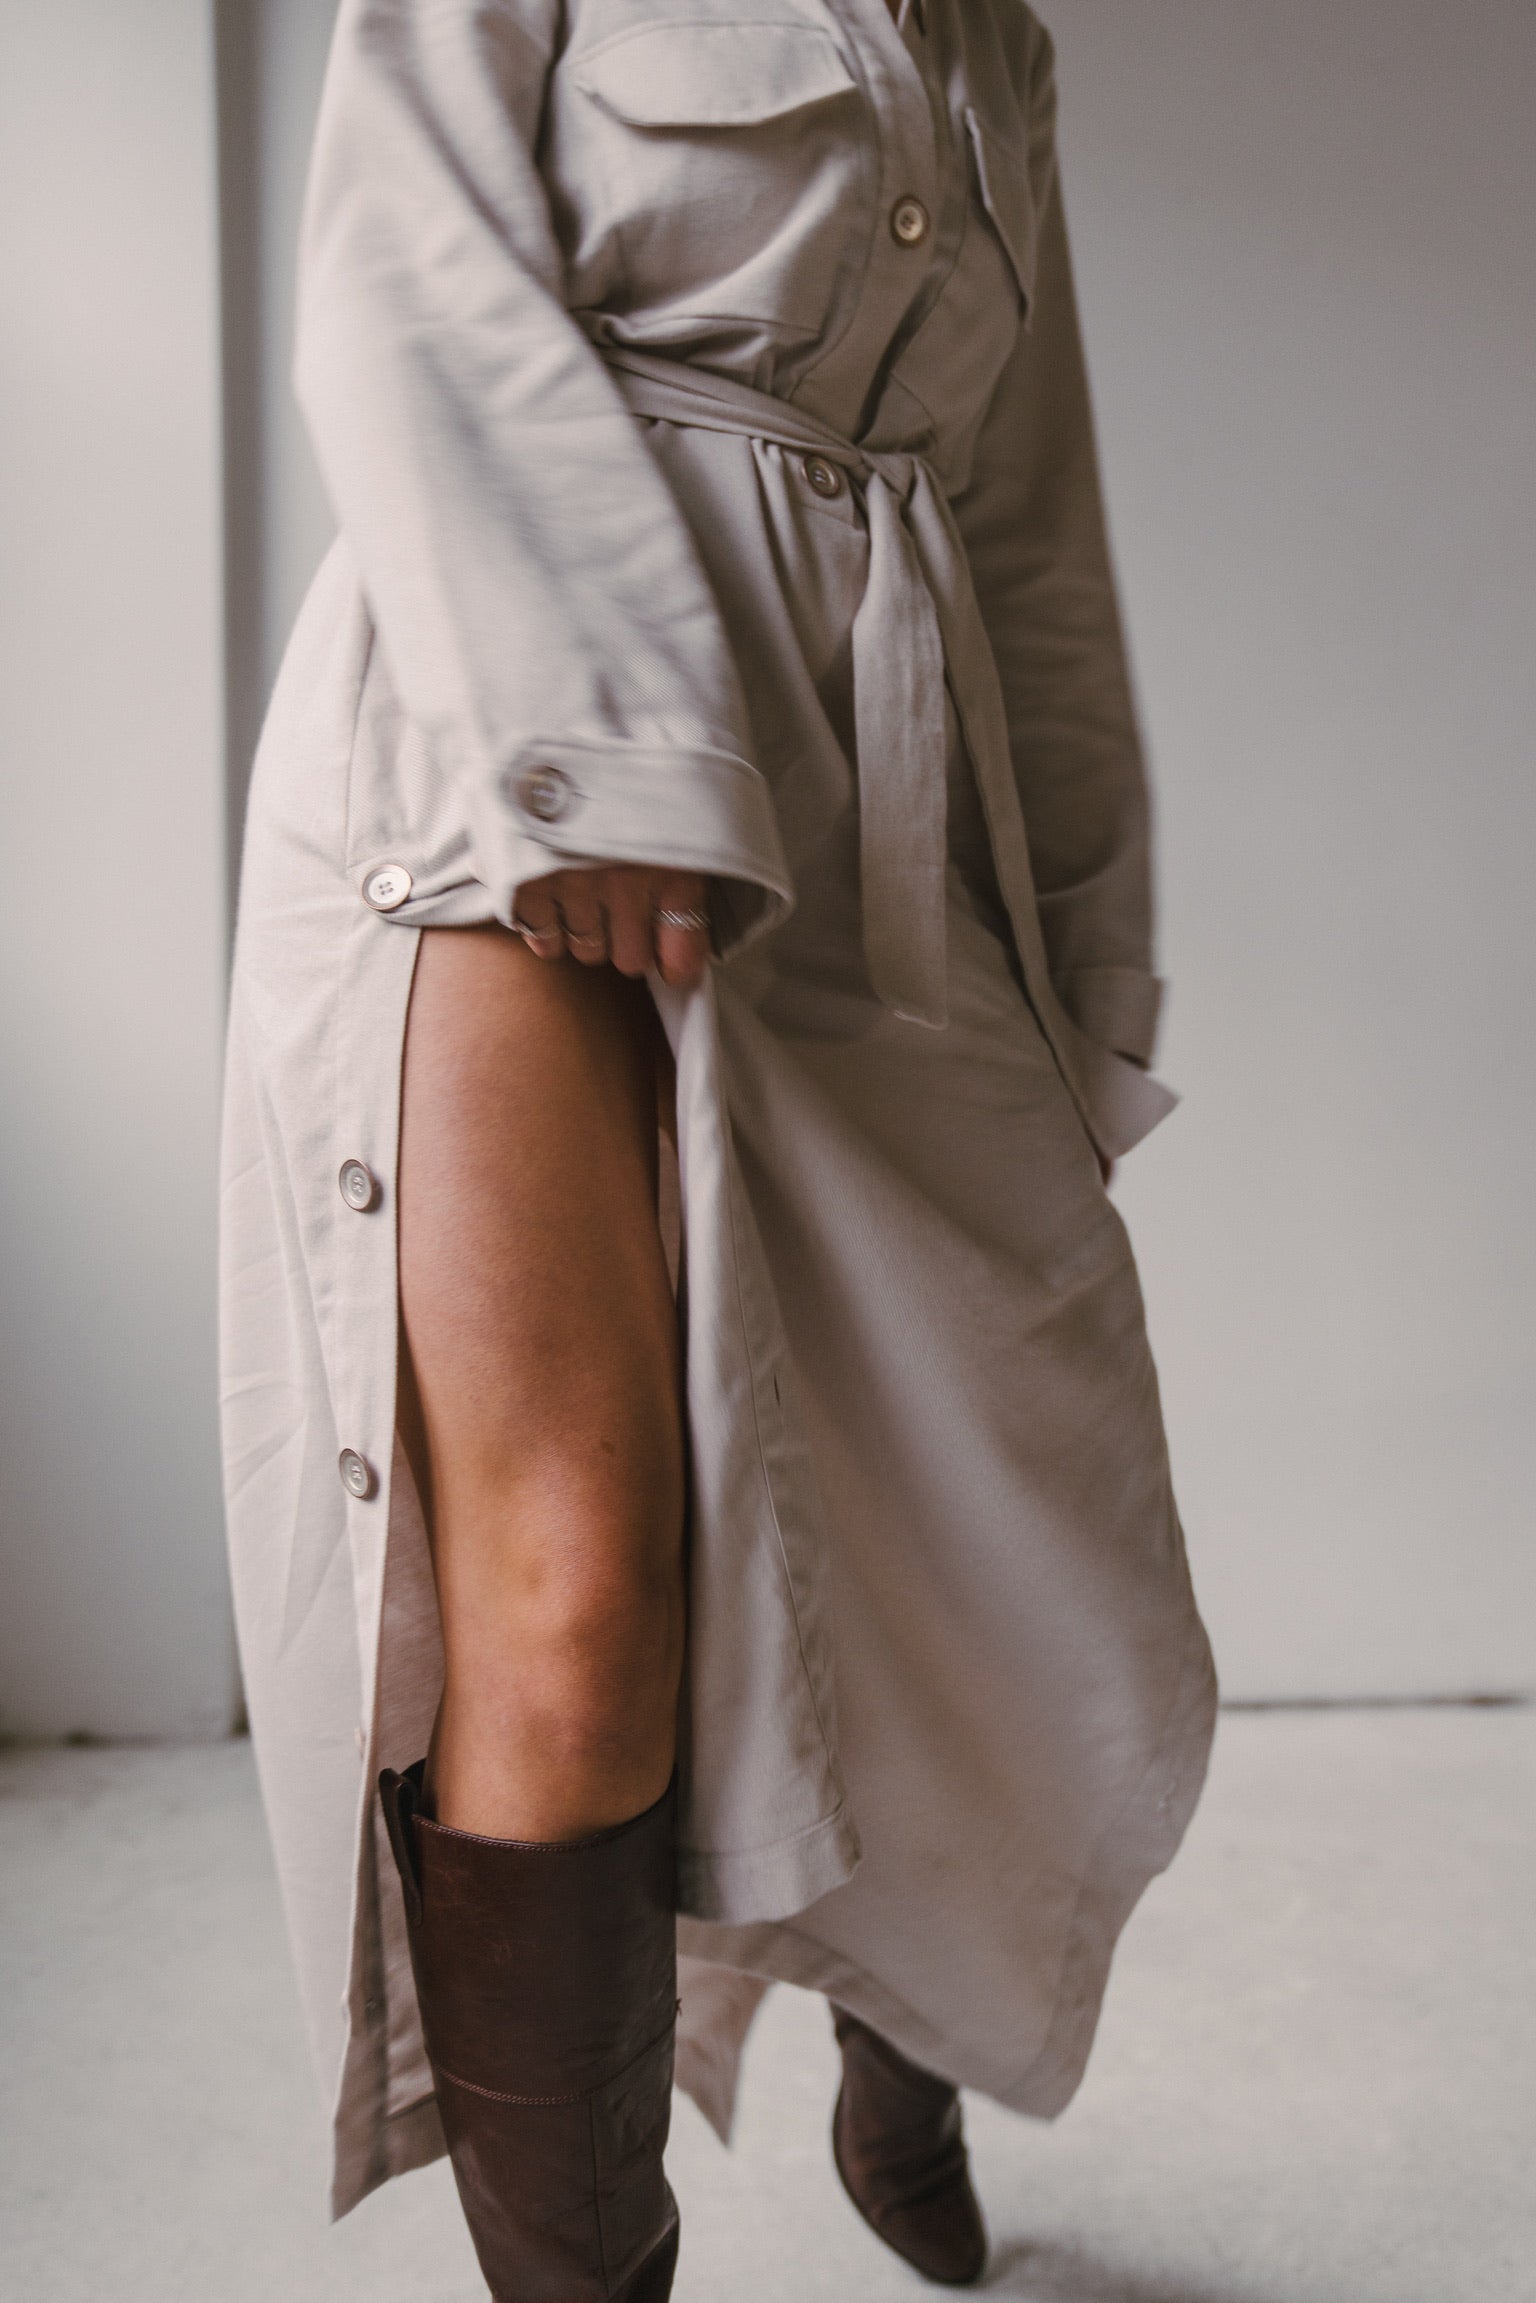 Rachael Noll wearing The Lynda Dress by Bastet Noir, custom-made for her